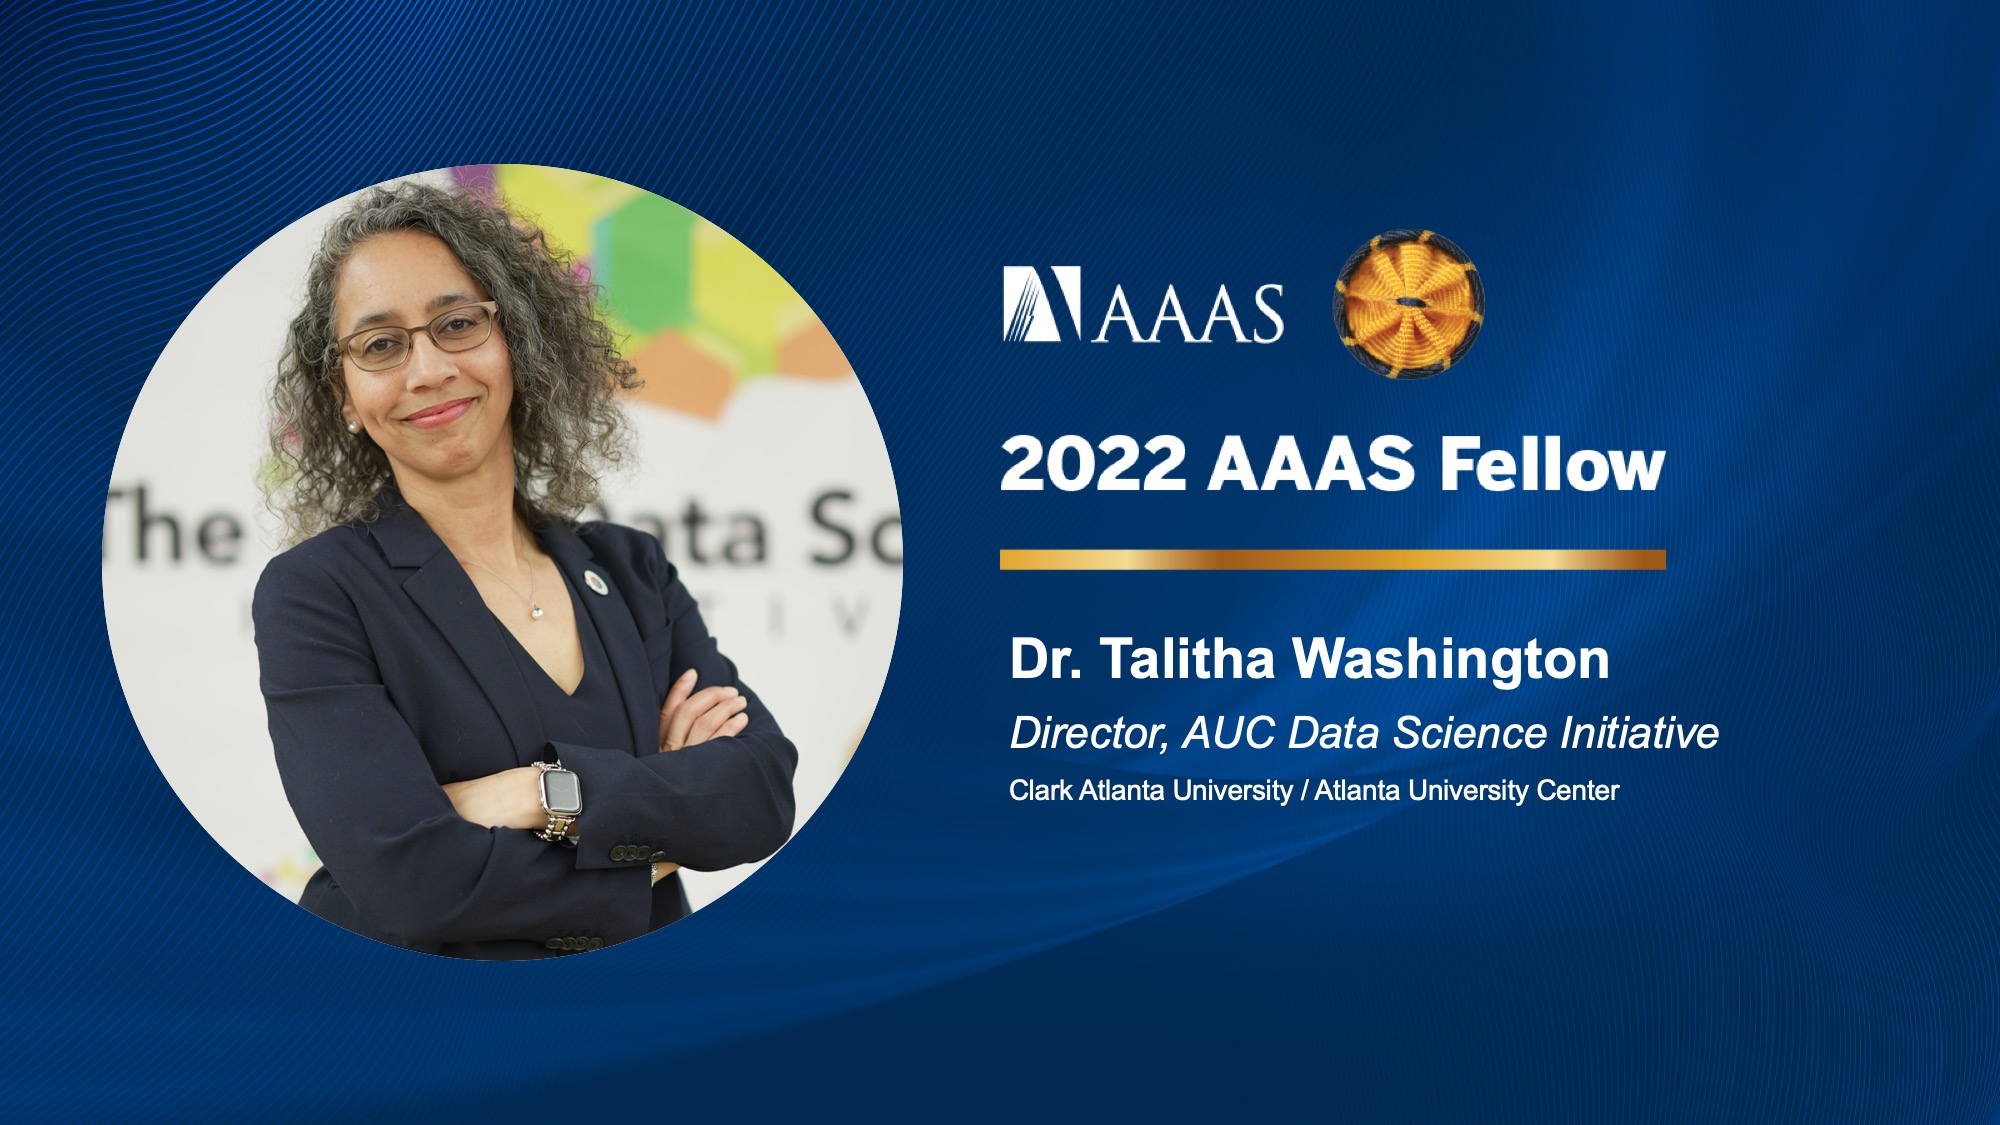 Visionary Mathematician Dr. Talitha Washington Named 2022 AAAS Fellow